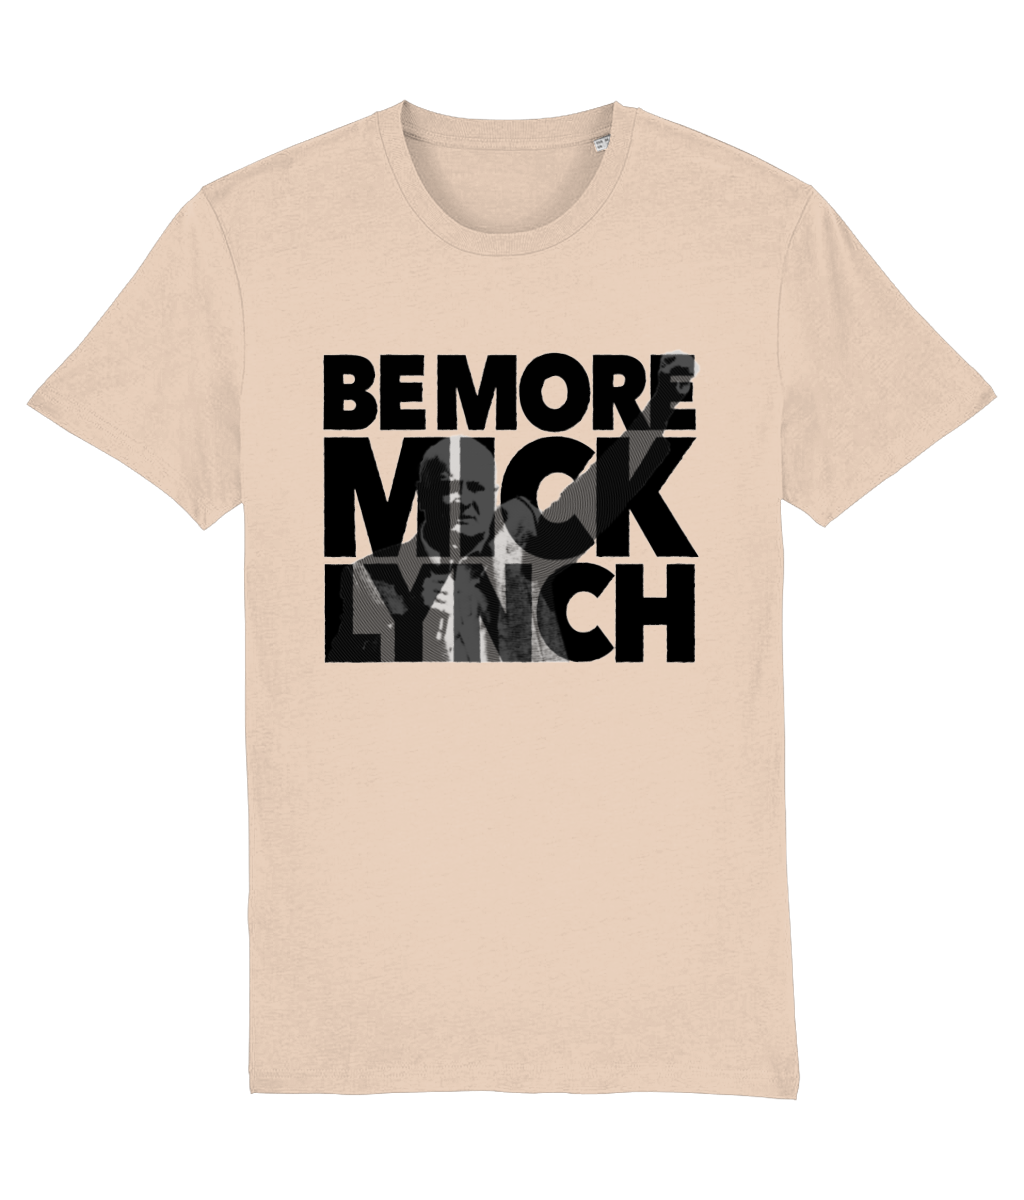 Be More Mick Lynch – Dark on light organic T-shirt